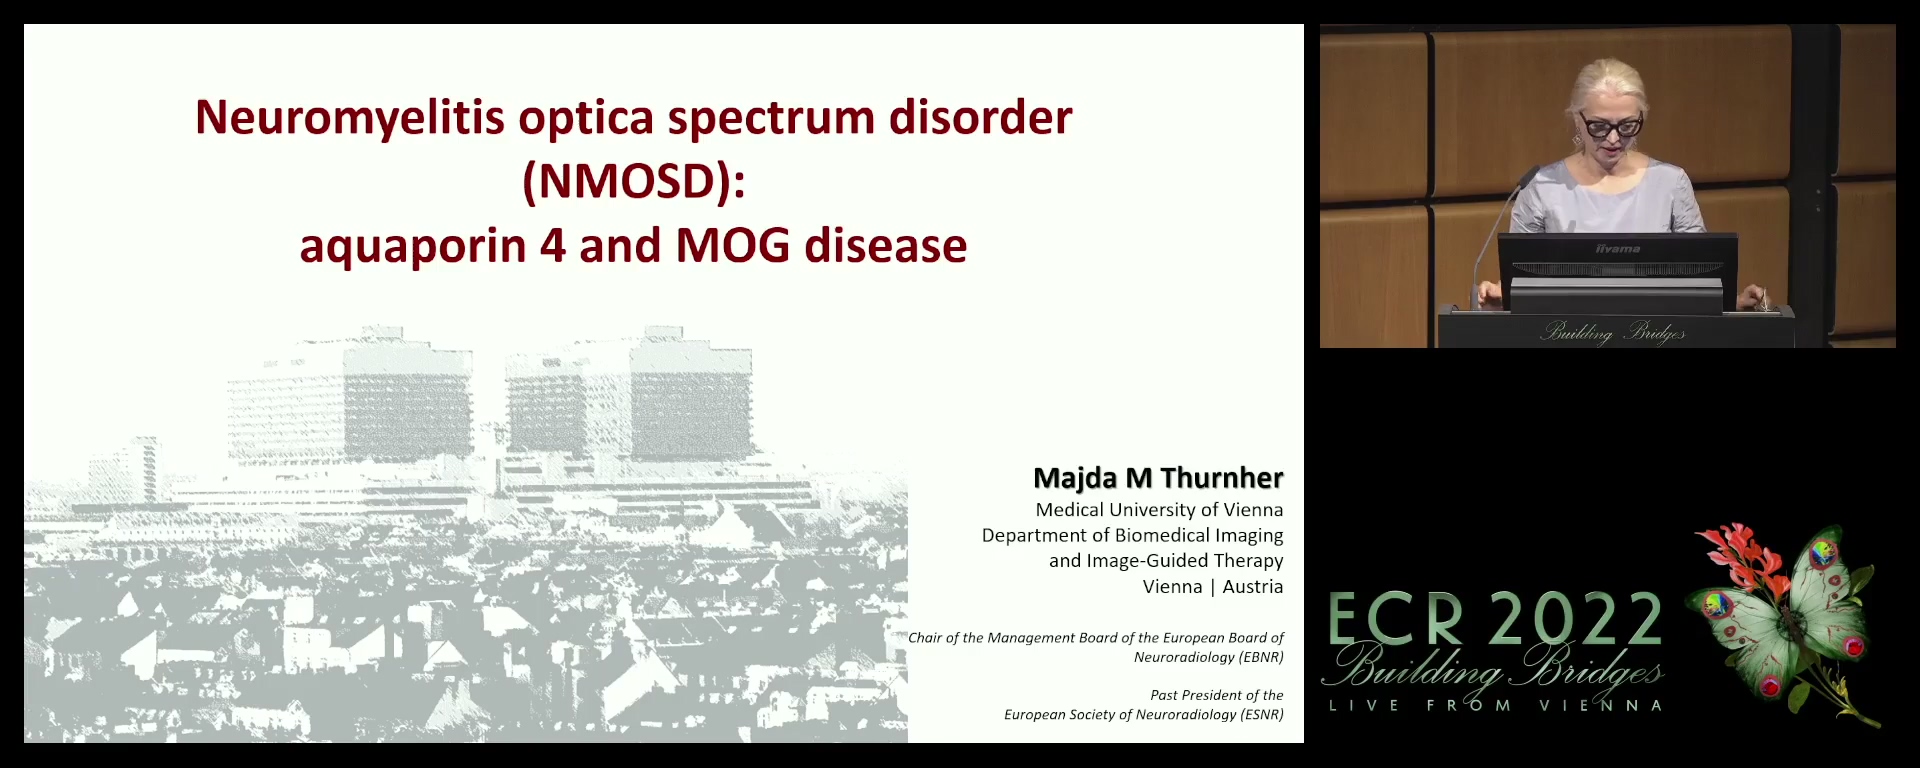 Neuromyelitis optica spectrum disorder (NMOSD): aquaporin 4 and MOG disease - Majda M. Thurnher, Vienna / AT